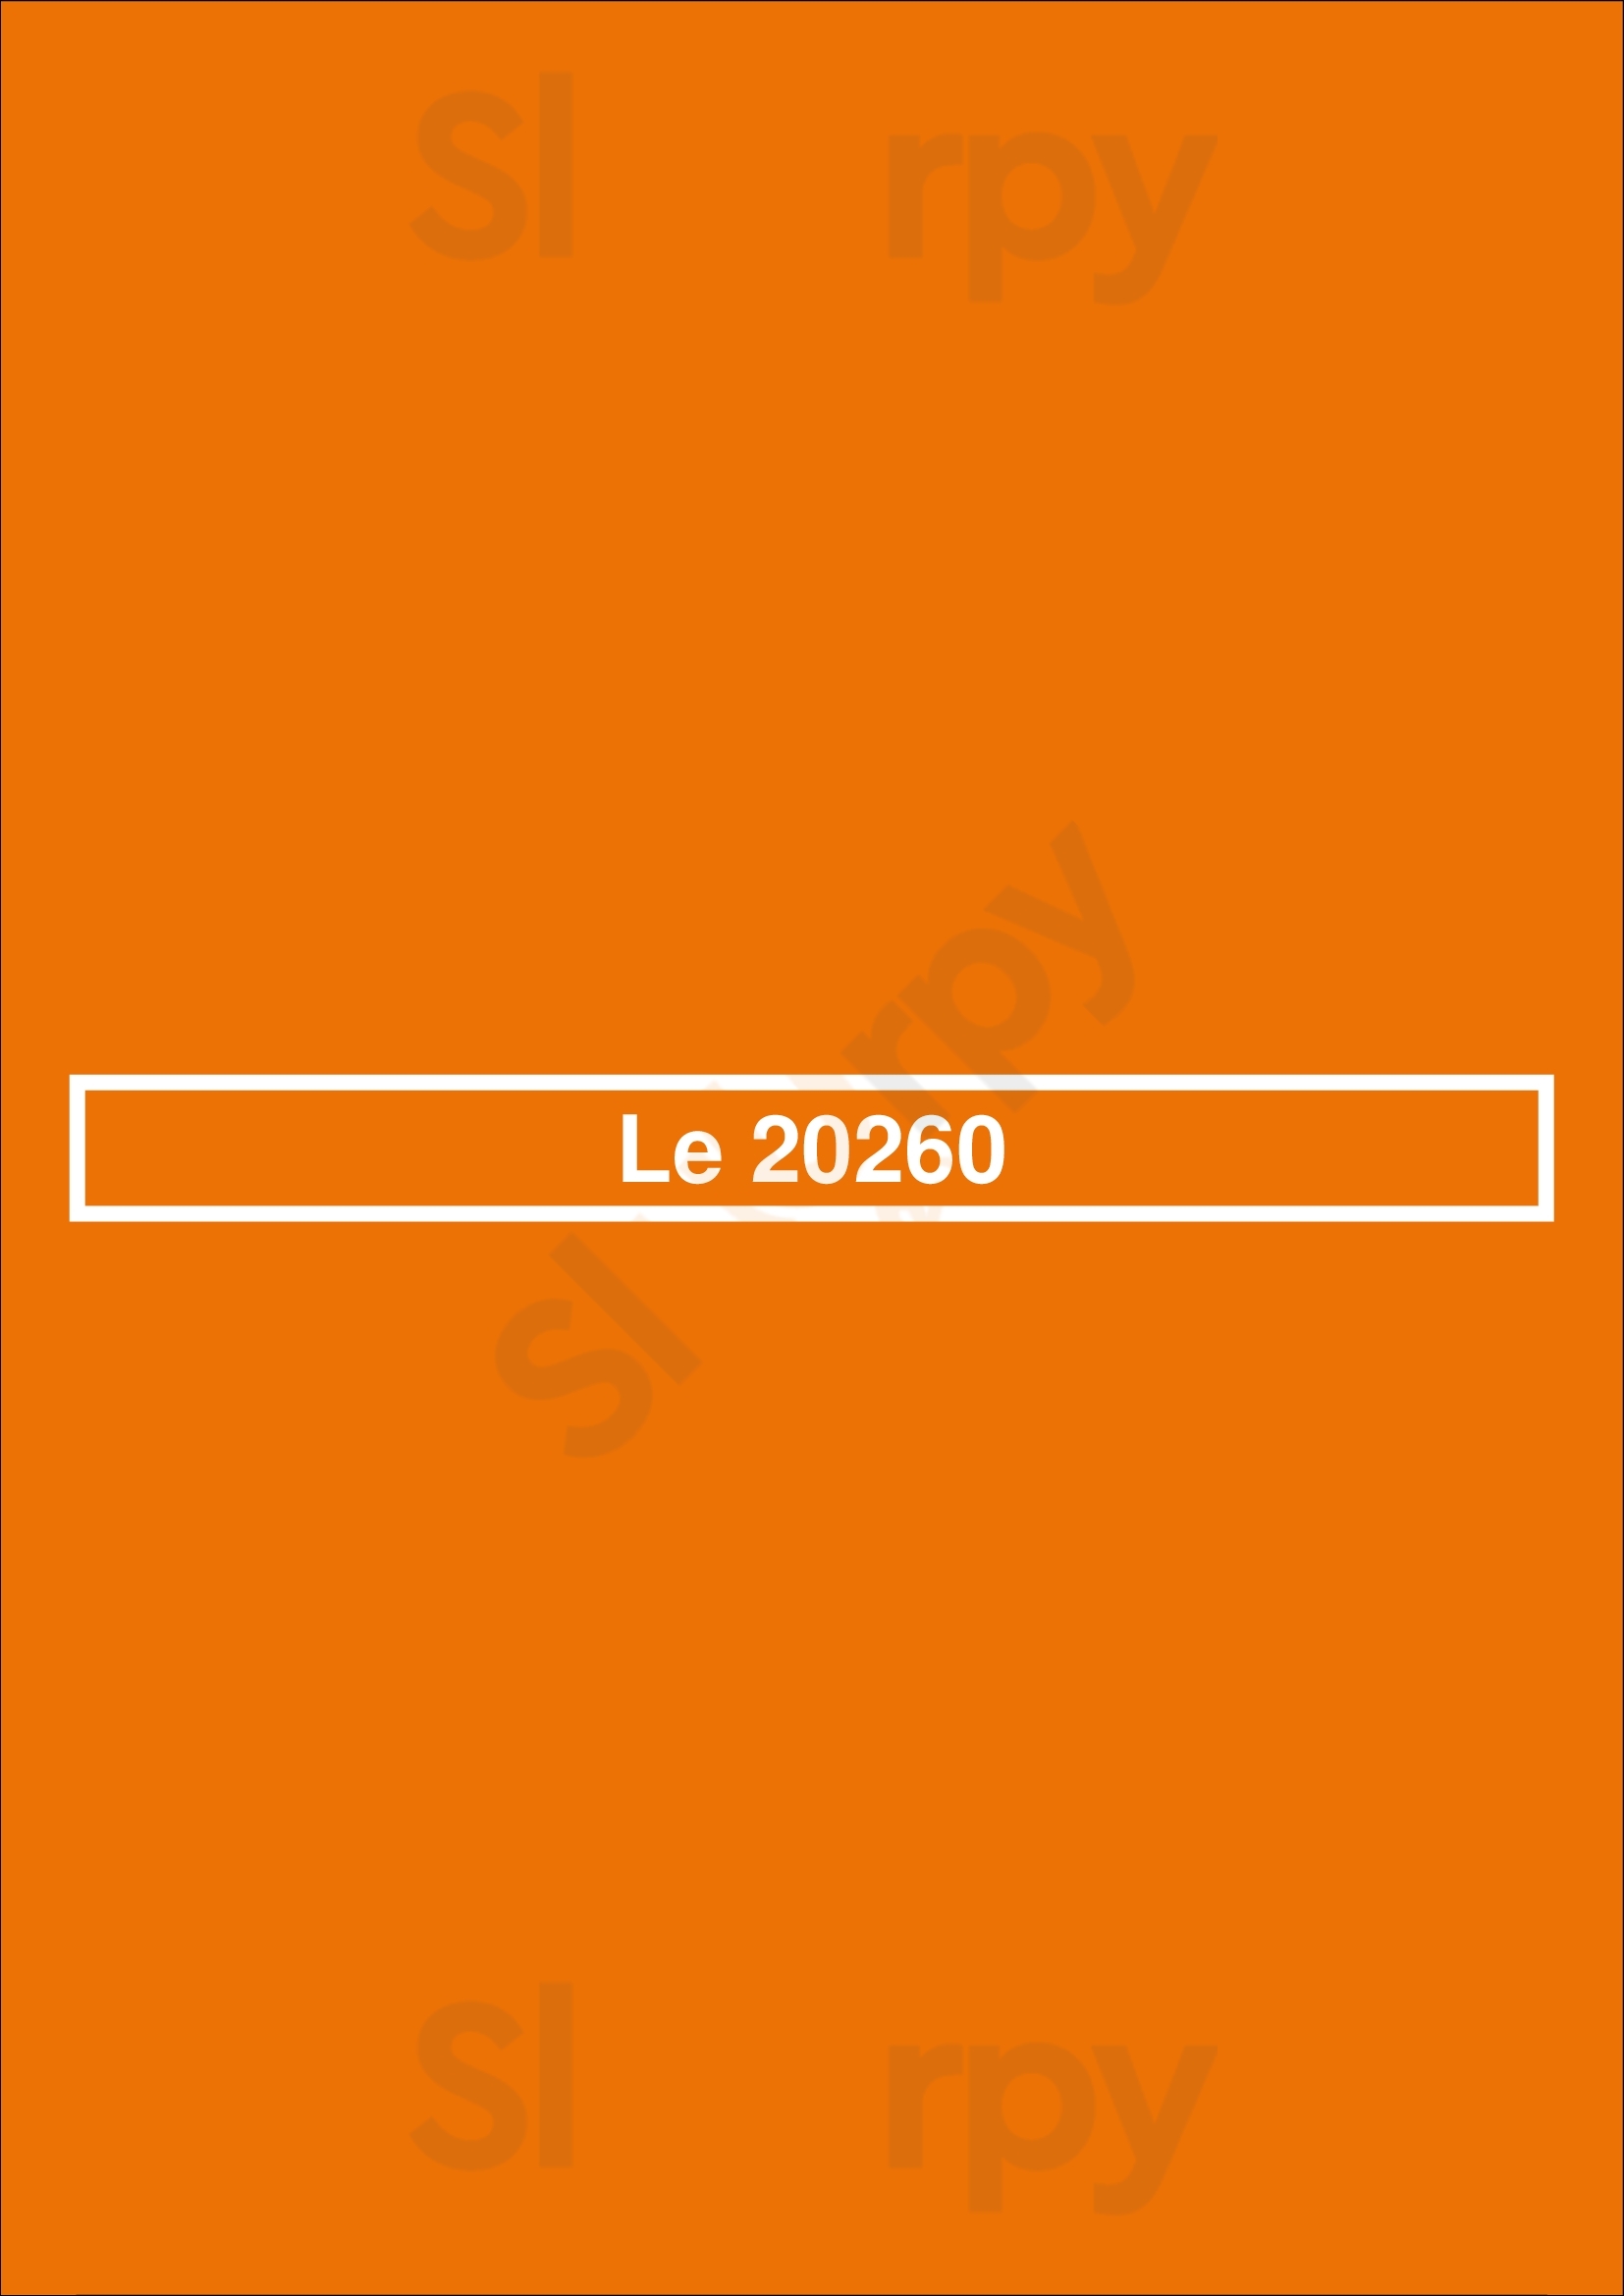 Le 20260 Marseille Menu - 1